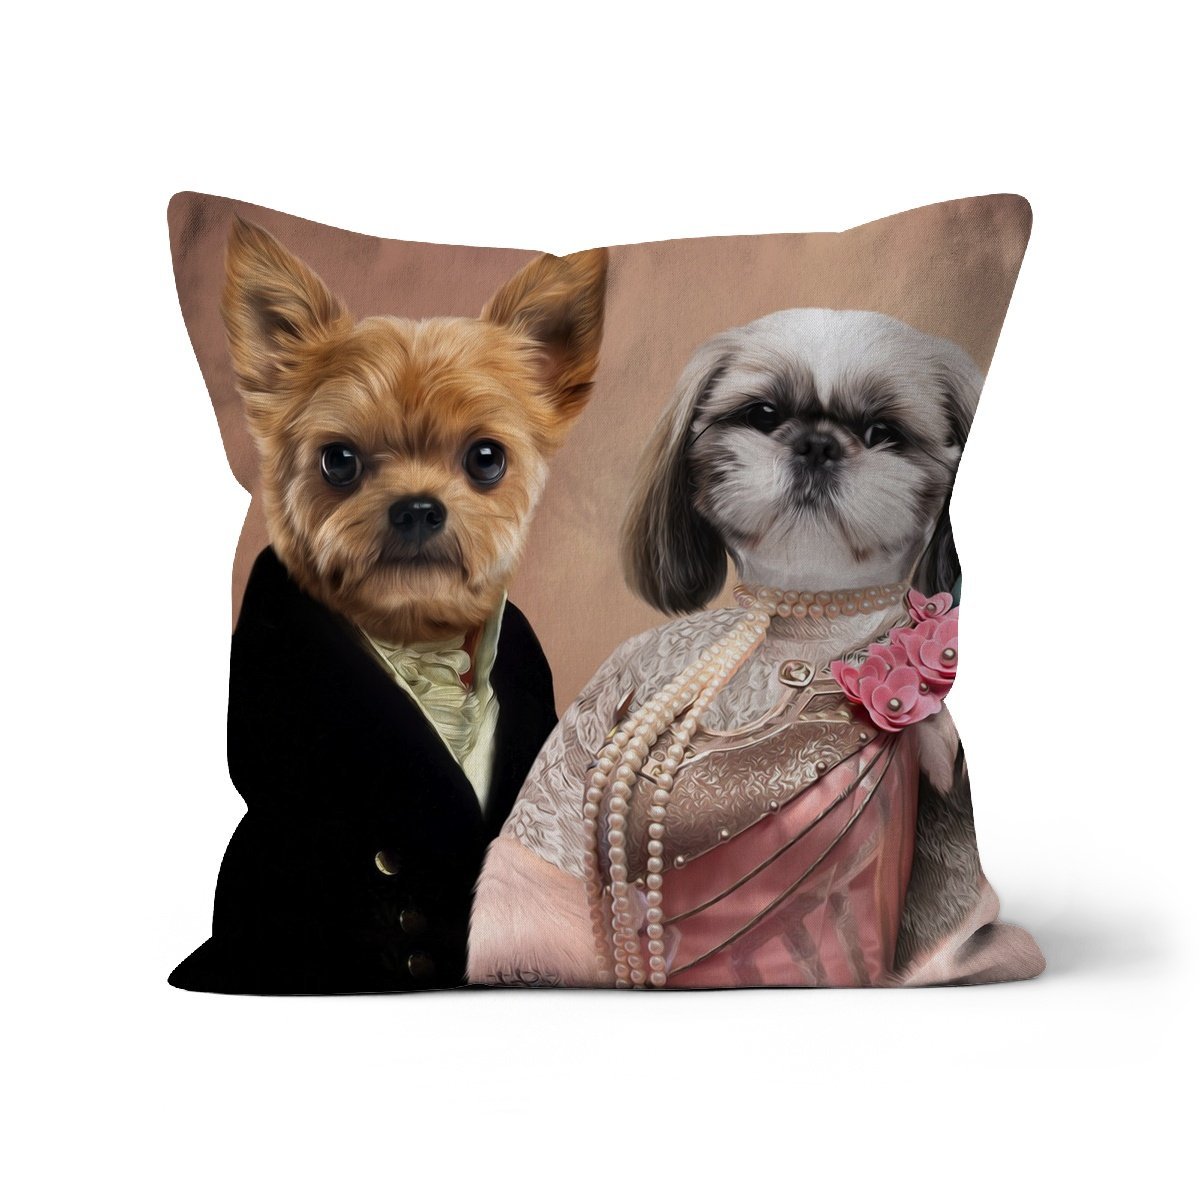 The Earl & His Fur Lady: Custom Pet Cushion - Paw & Glory - #pet portraits# - #dog portraits# - #pet portraits uk#paw & glory, custom pet portrait pillow,dog pillows personalized, personalised dog pillows, custom pillow of pet, dog pillow custom, pet print pillow